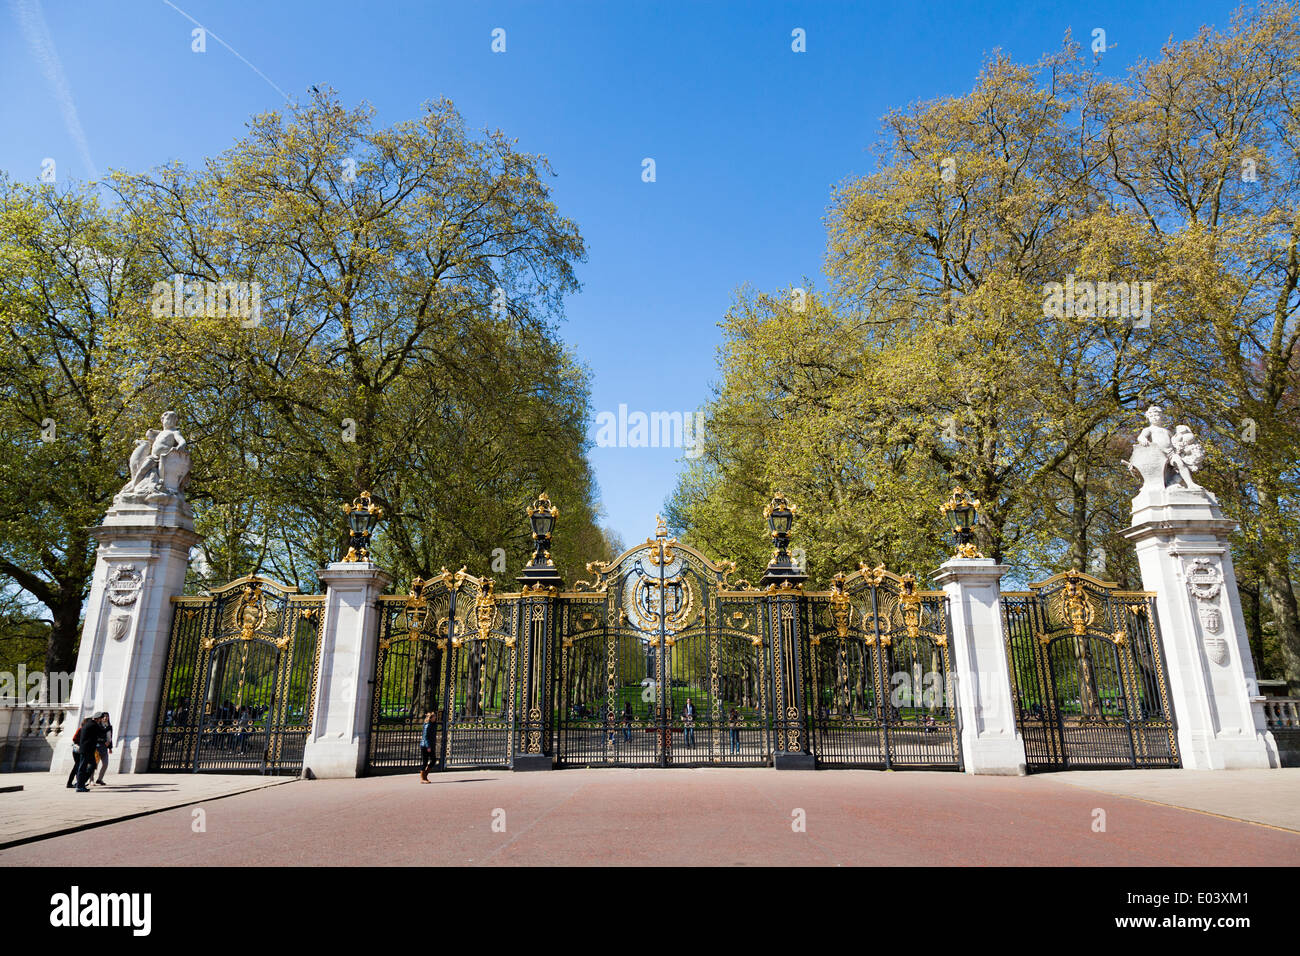 Kanada-Gate Eingang zum grünen Park London. Stockfoto